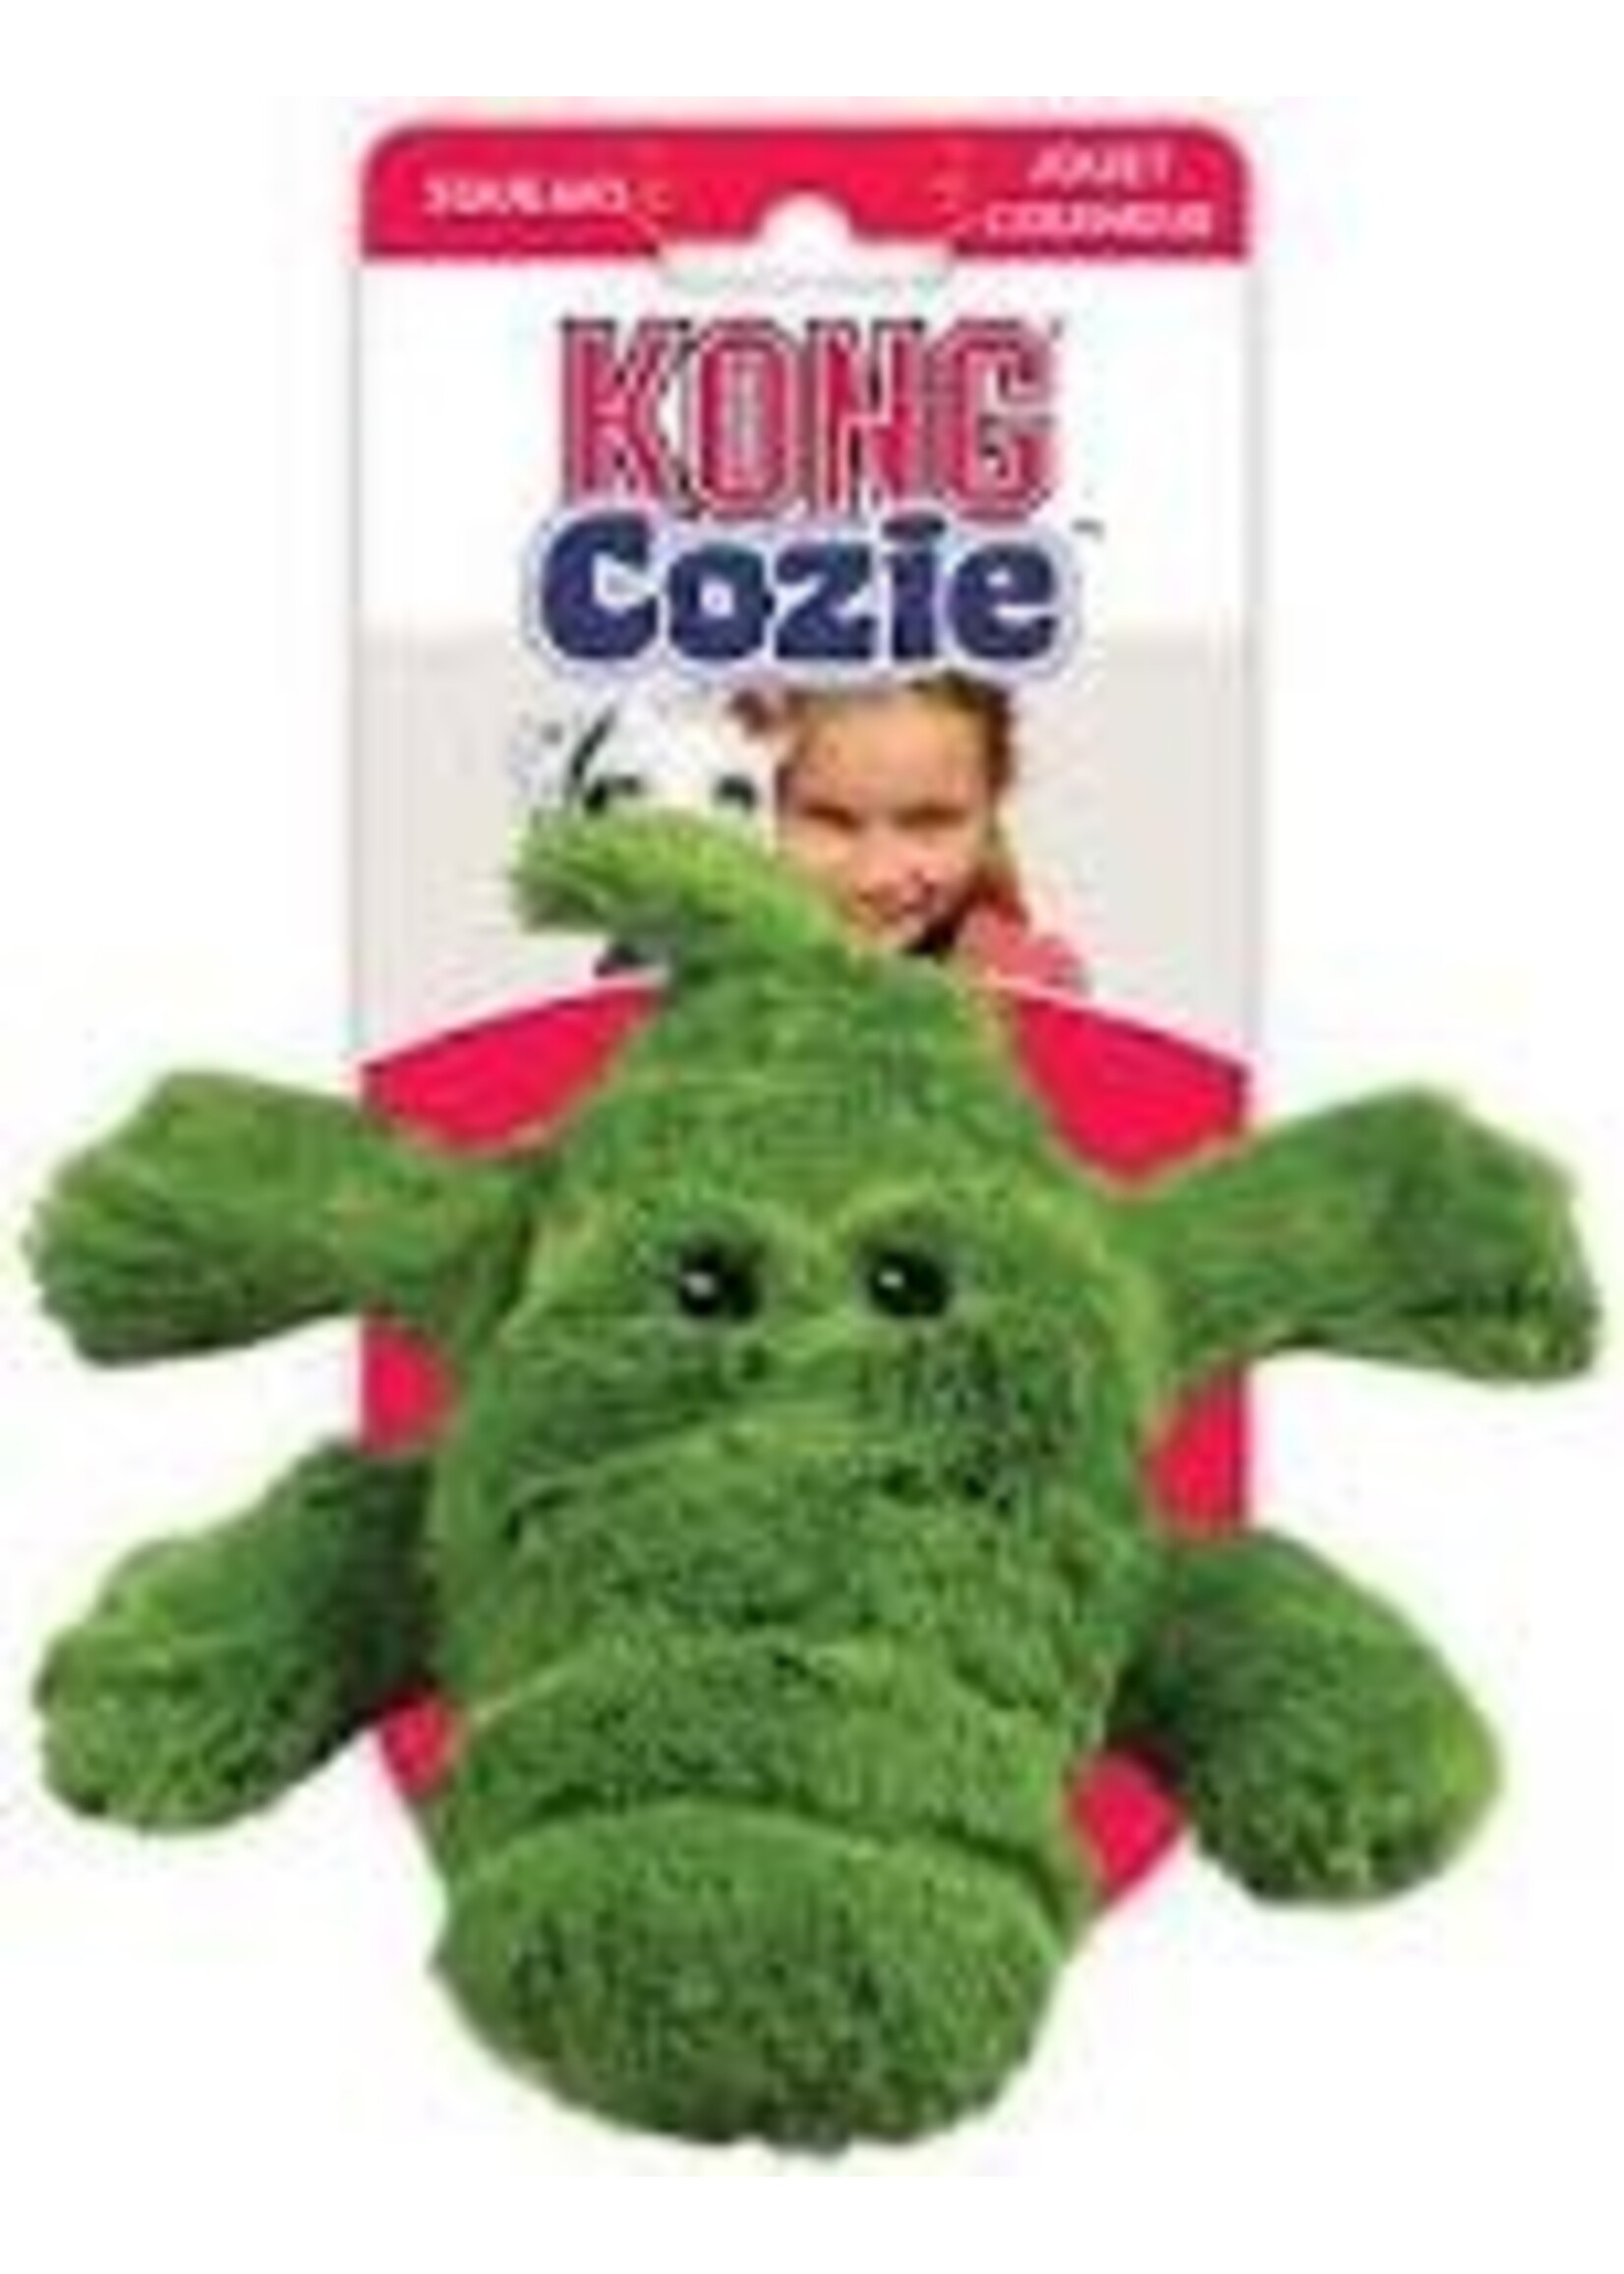 Kong Kong - Cozie Alligator